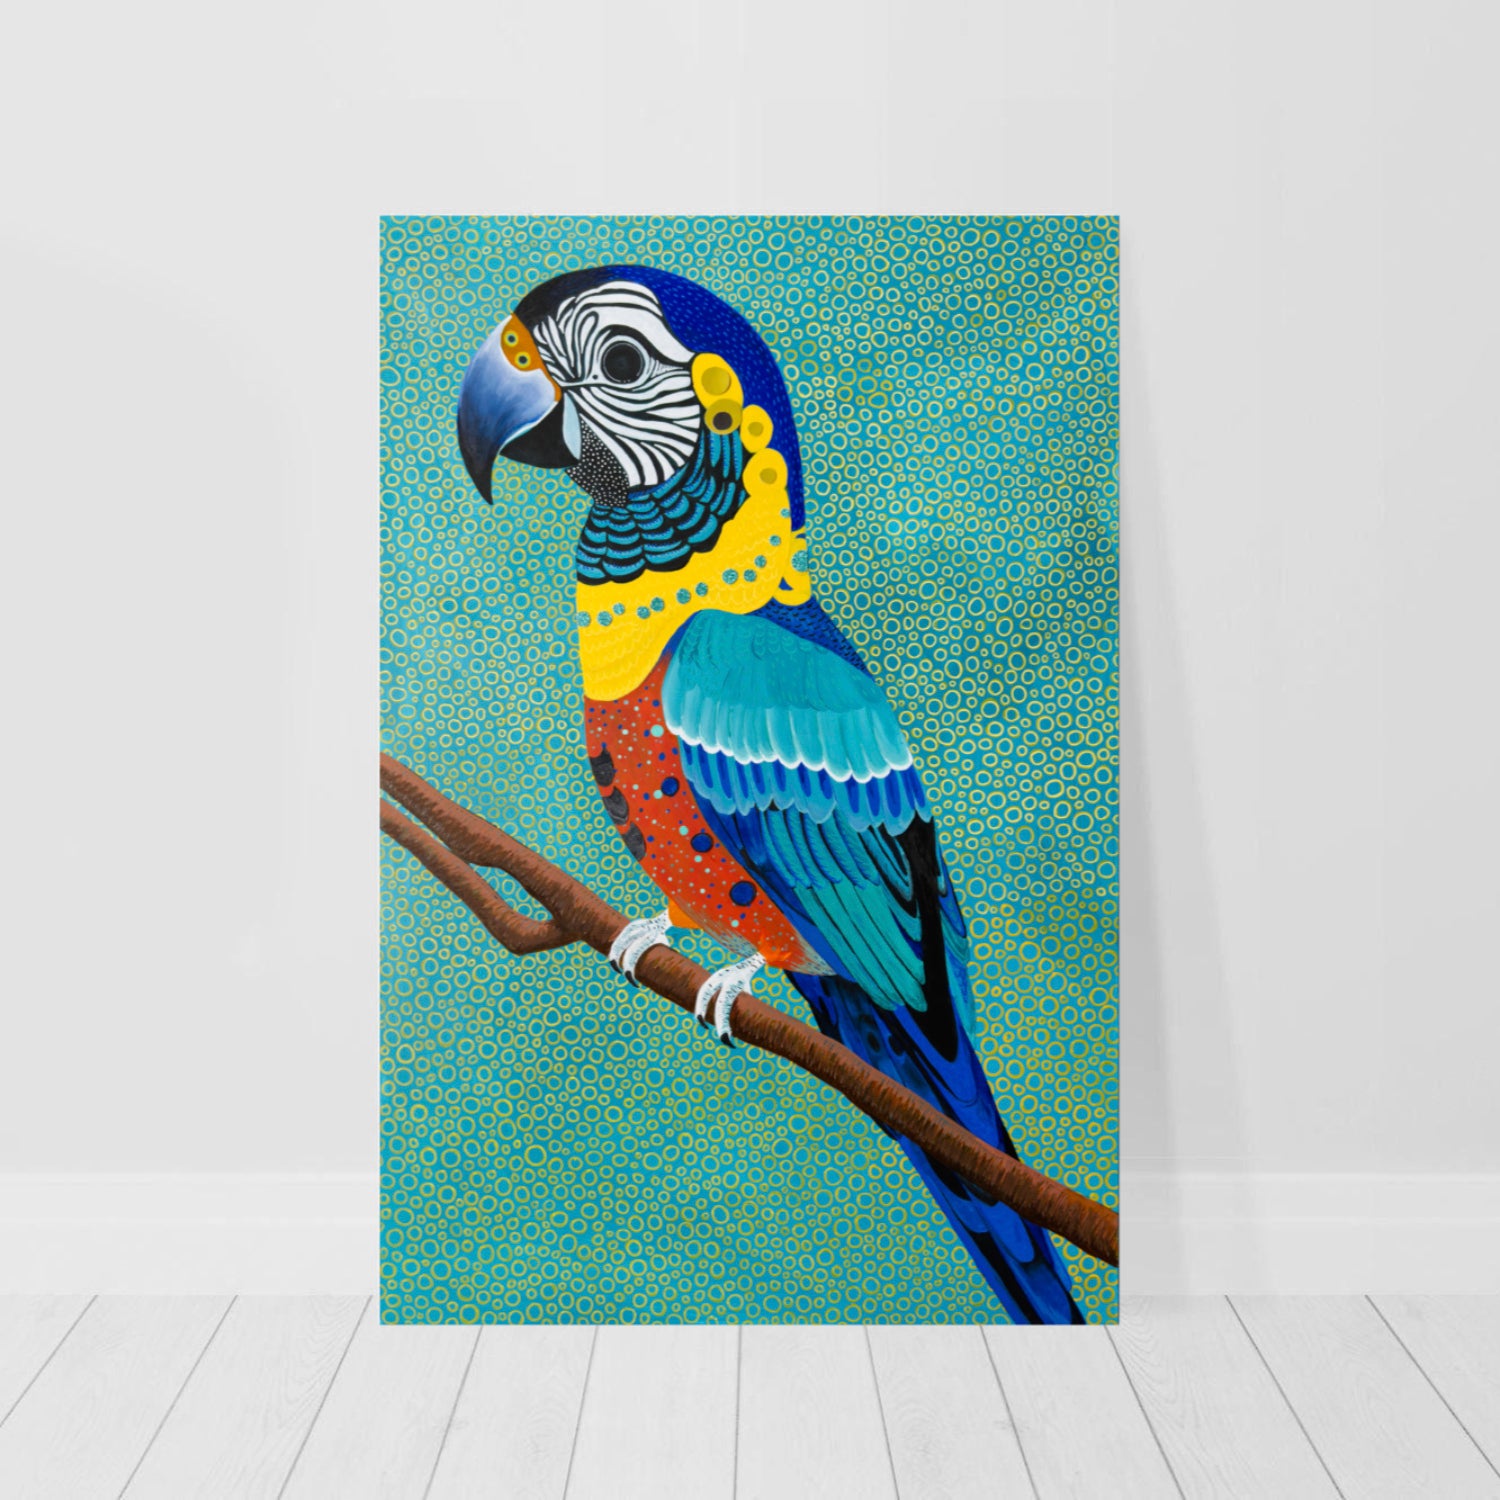 vibrant bird print of a macaw parrot